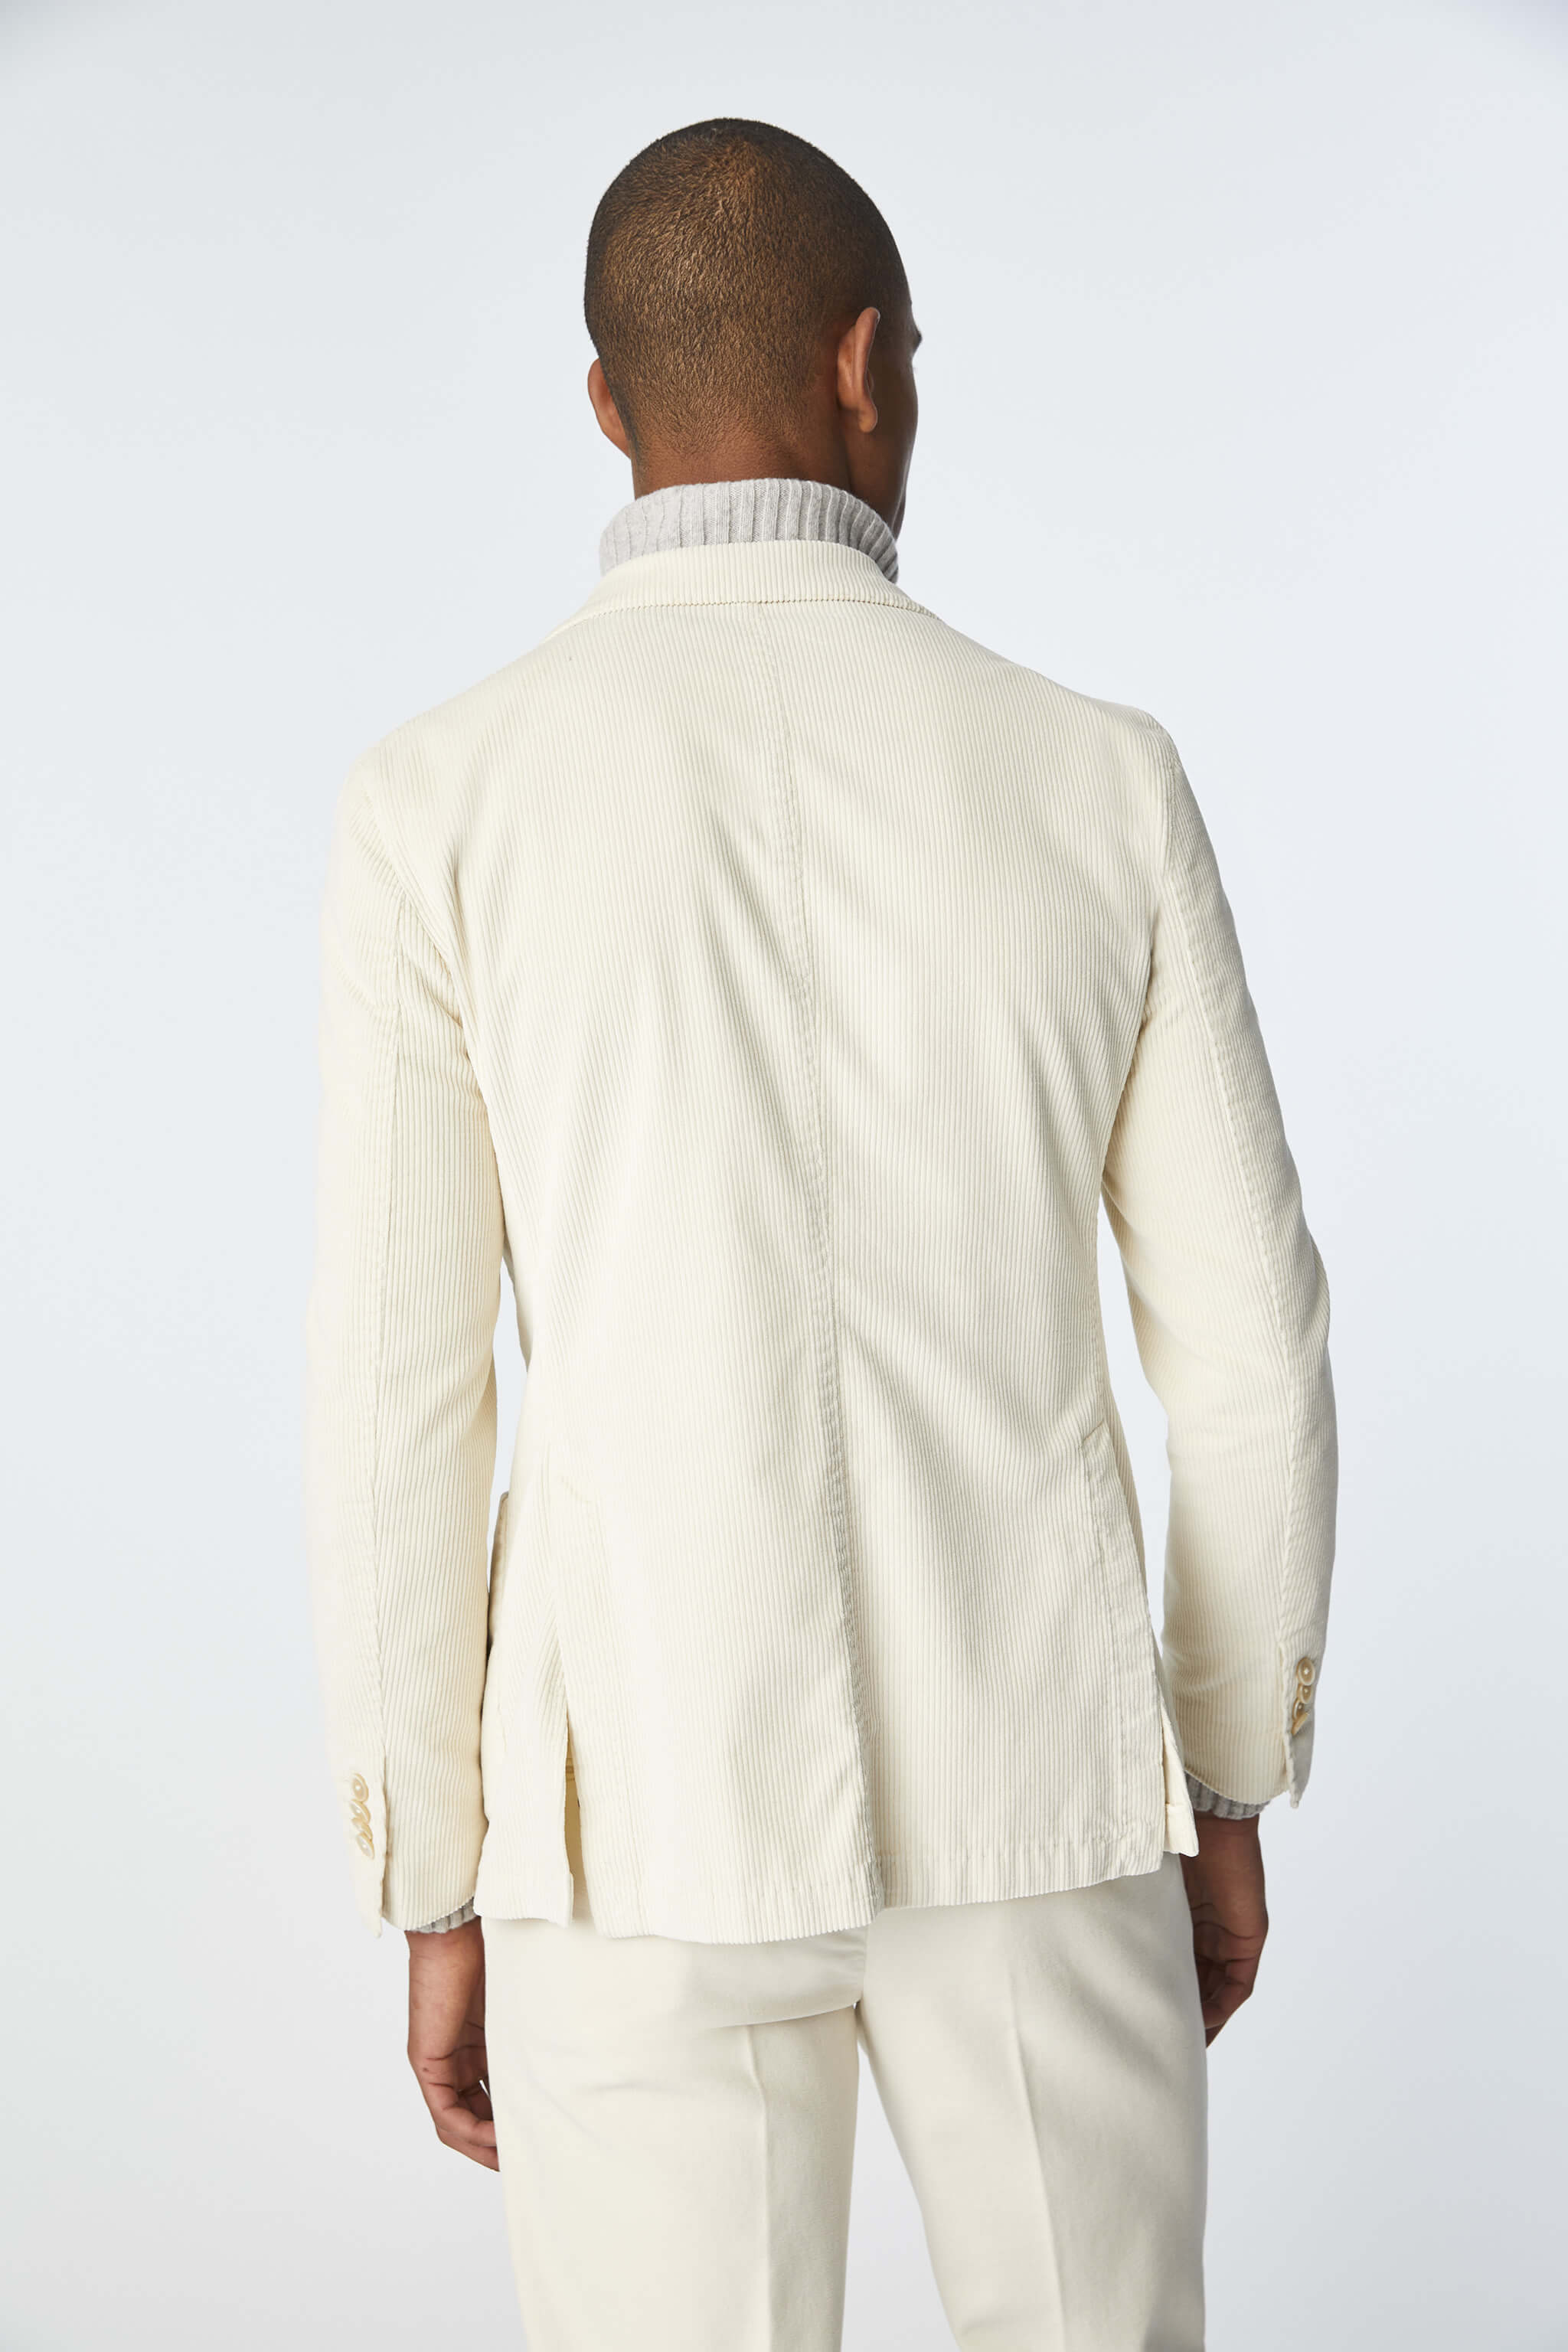 Garment-dyed STEVE jacket in ivory